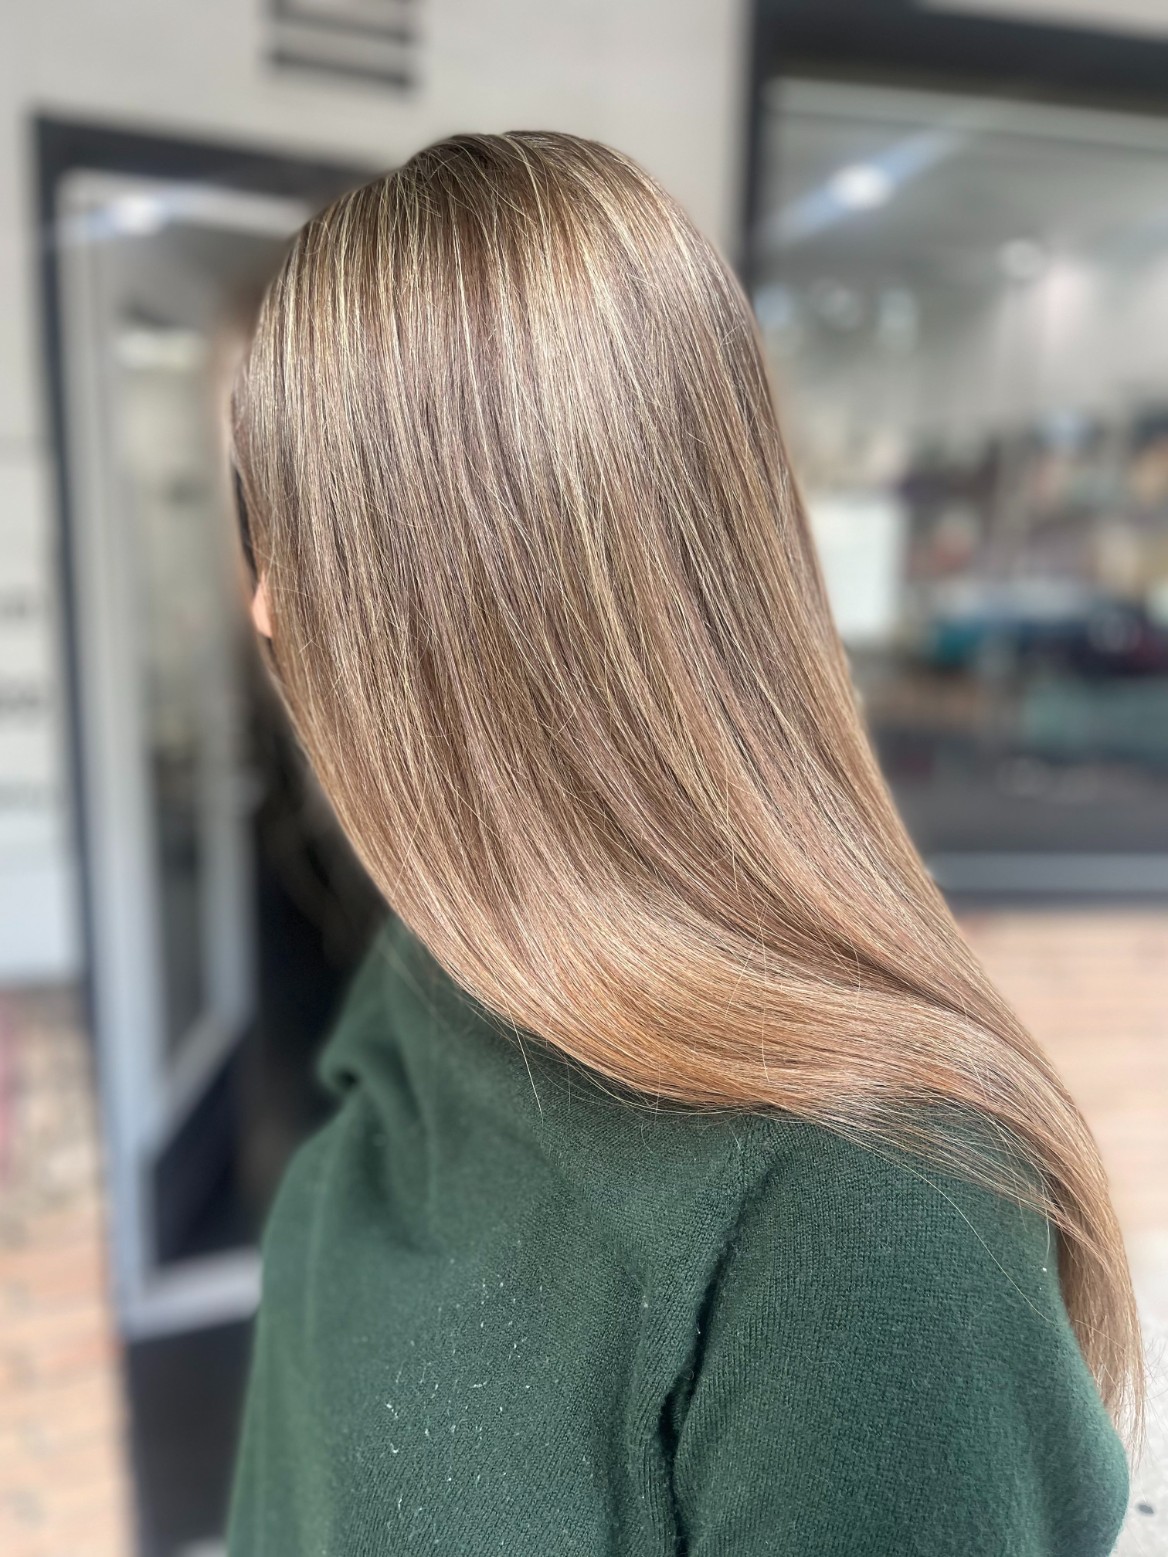 Olia - Ammonia-Free Permanent Hair Color - Dark Blonde - Garnier